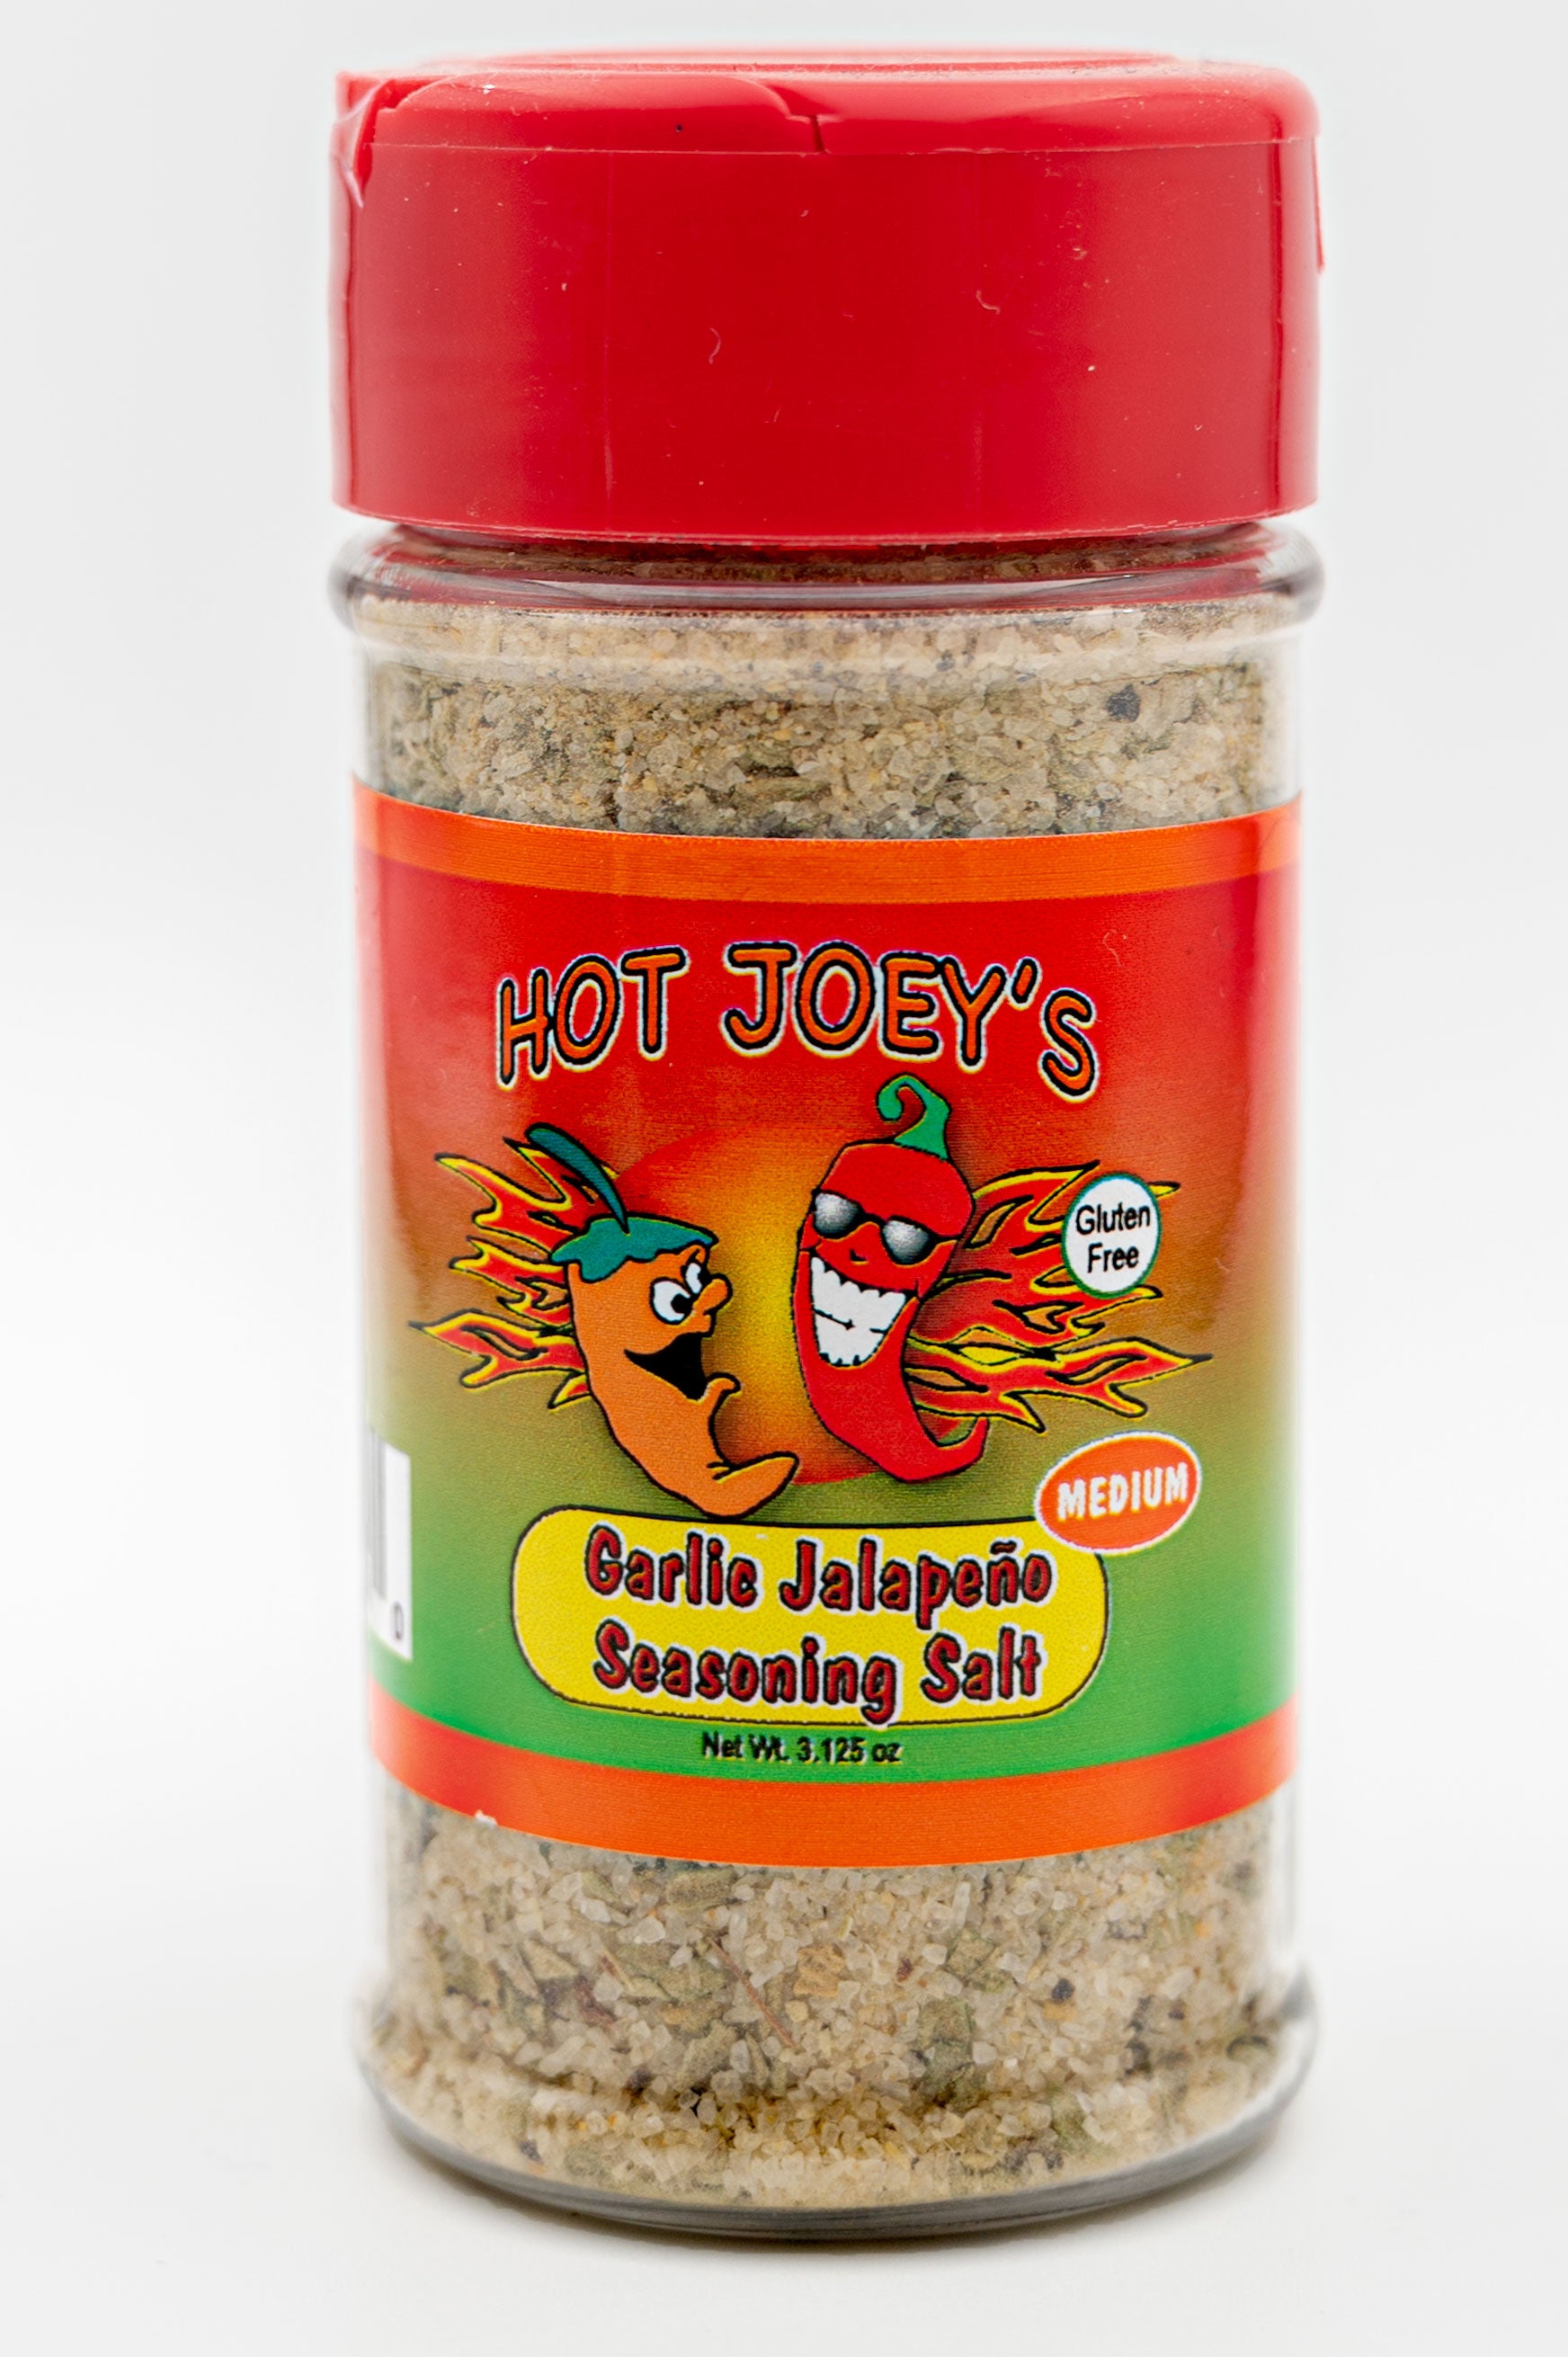 Garlic Jalapeno Seasoning Salt (Net Wt: 3.125oz) – Hot Joey's Hot